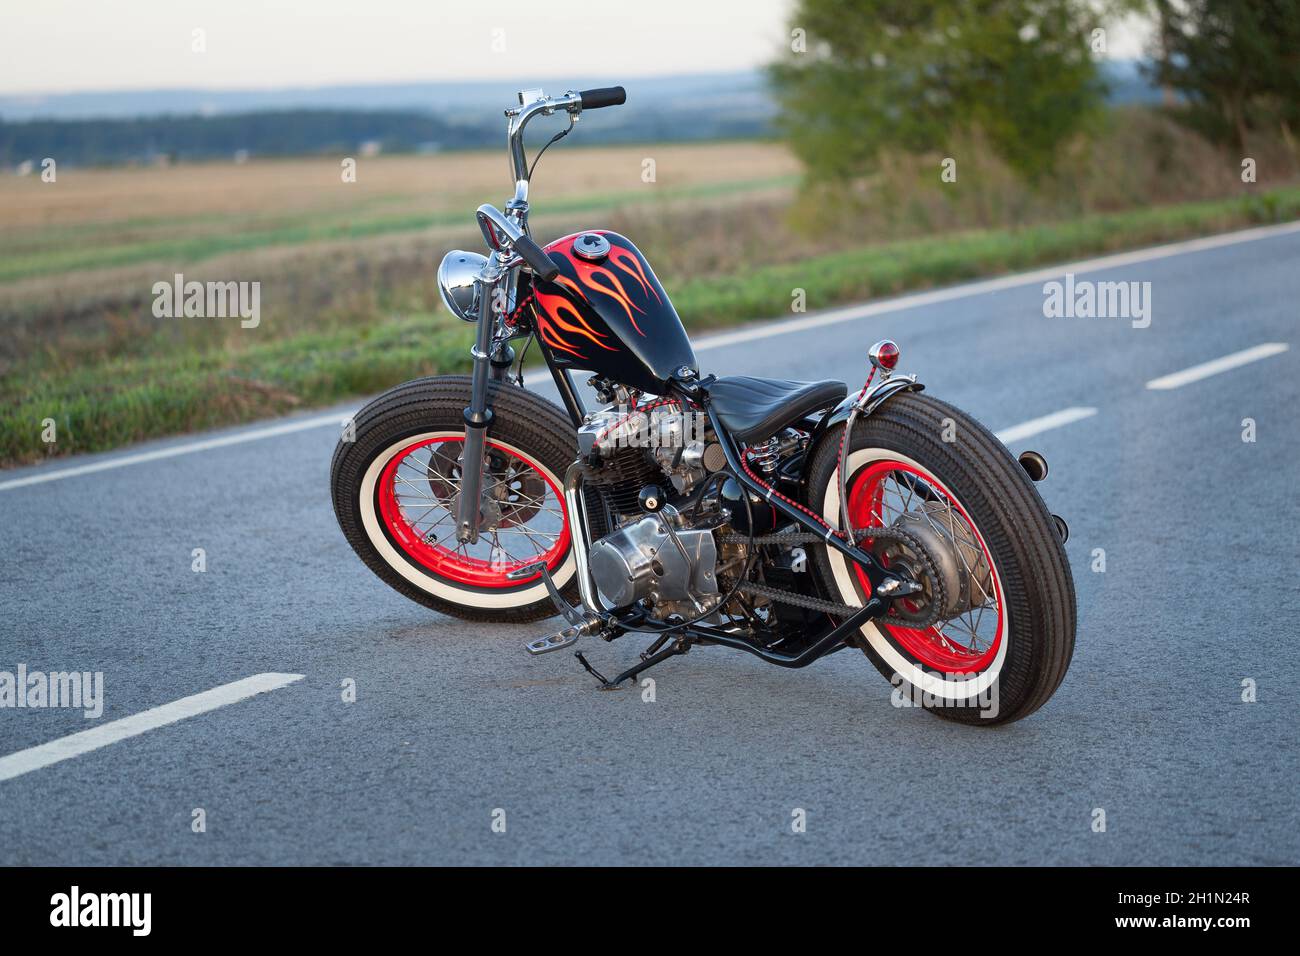 Custom bobber motorbike. Vintage style motorcycle standing on the